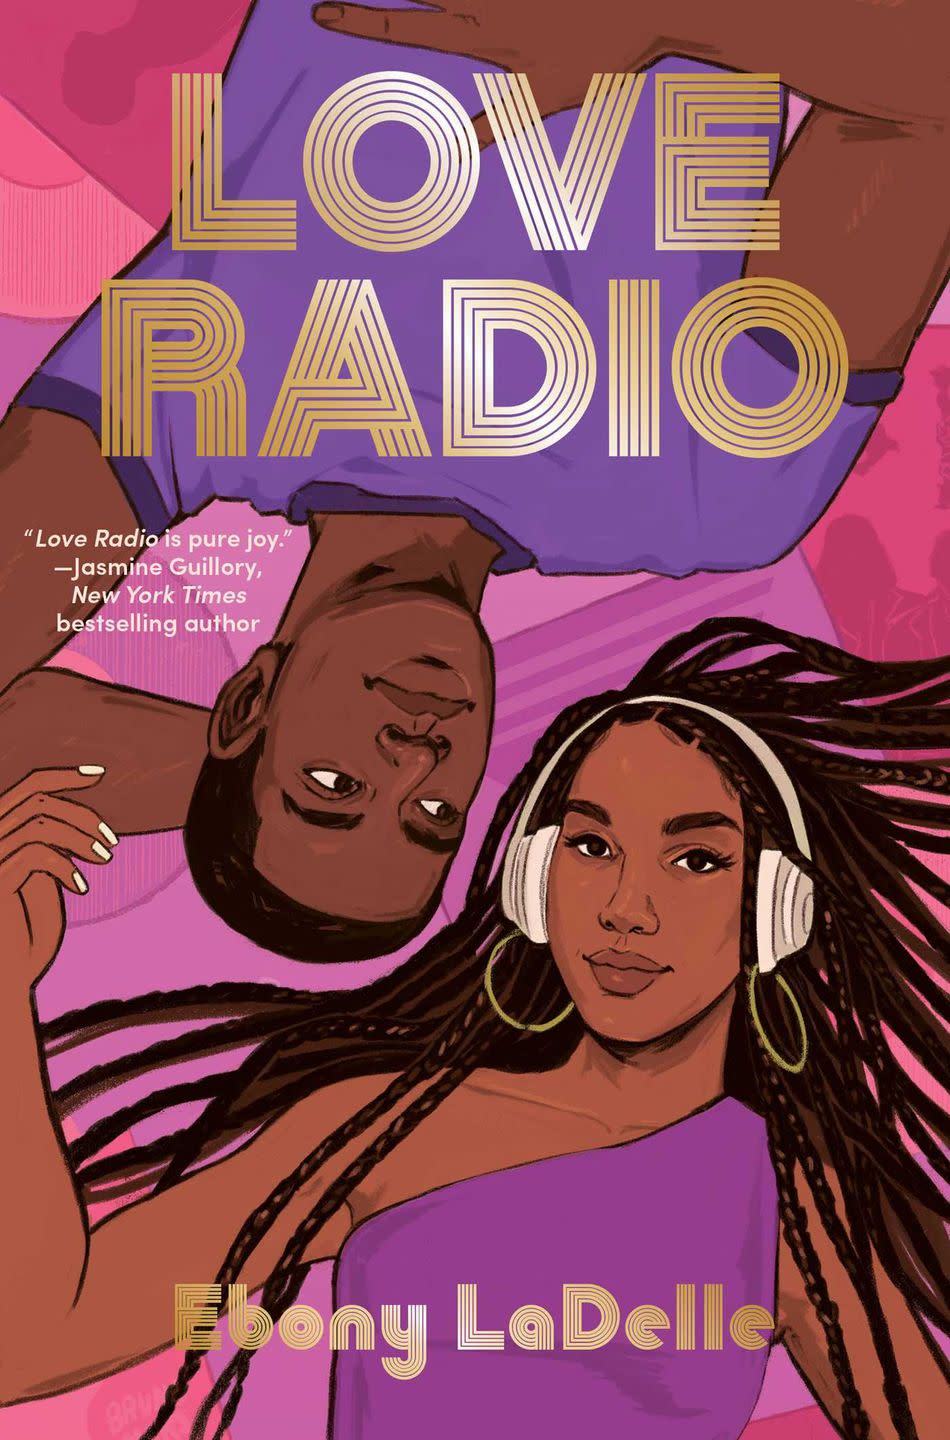 45) “Love Radio” by Ebony LaDelle